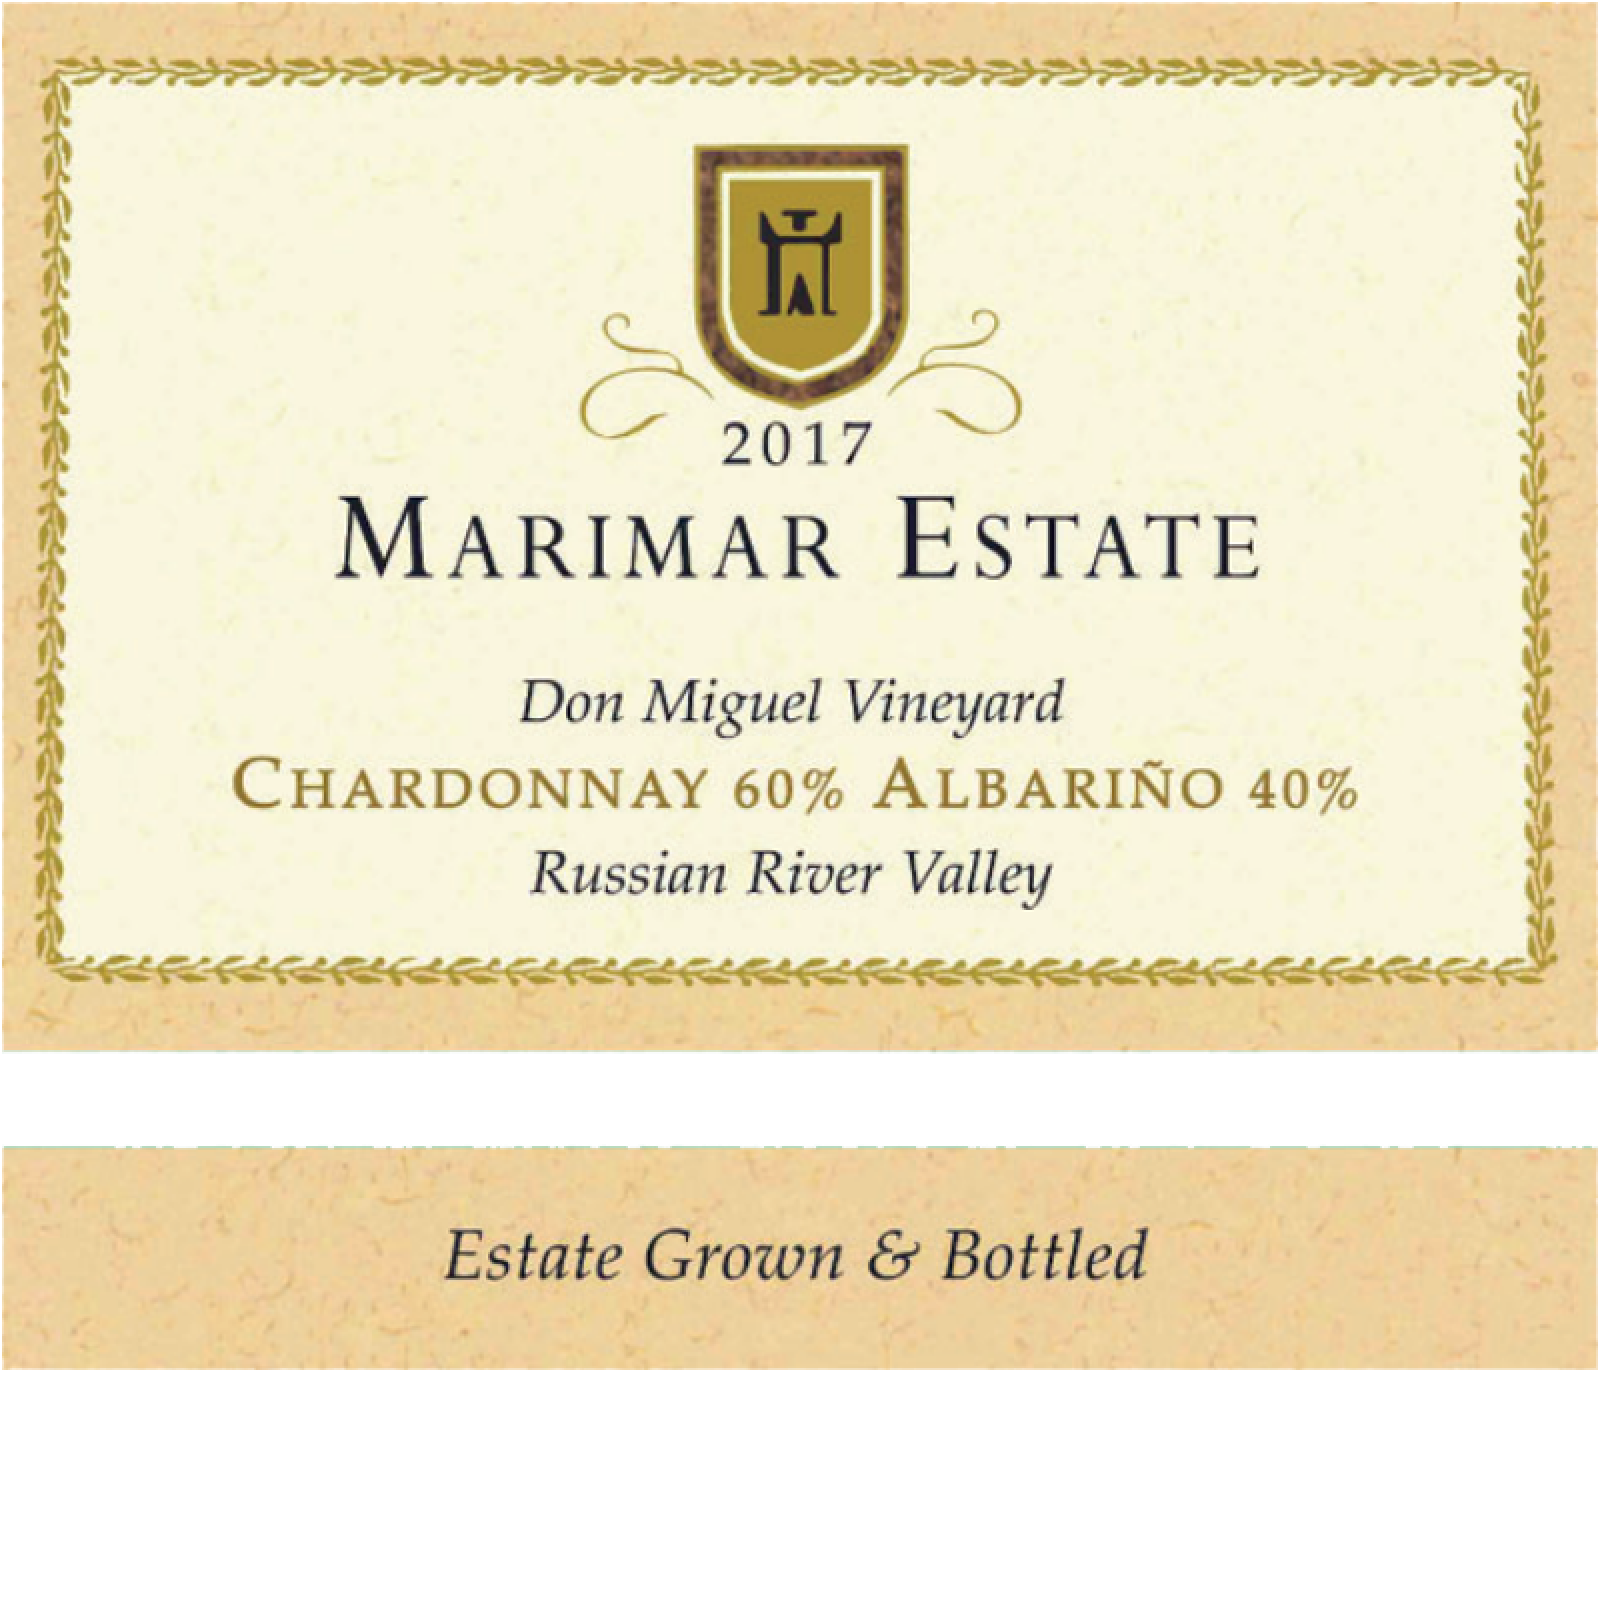 Marimar Chardonnay and Albarino 2017